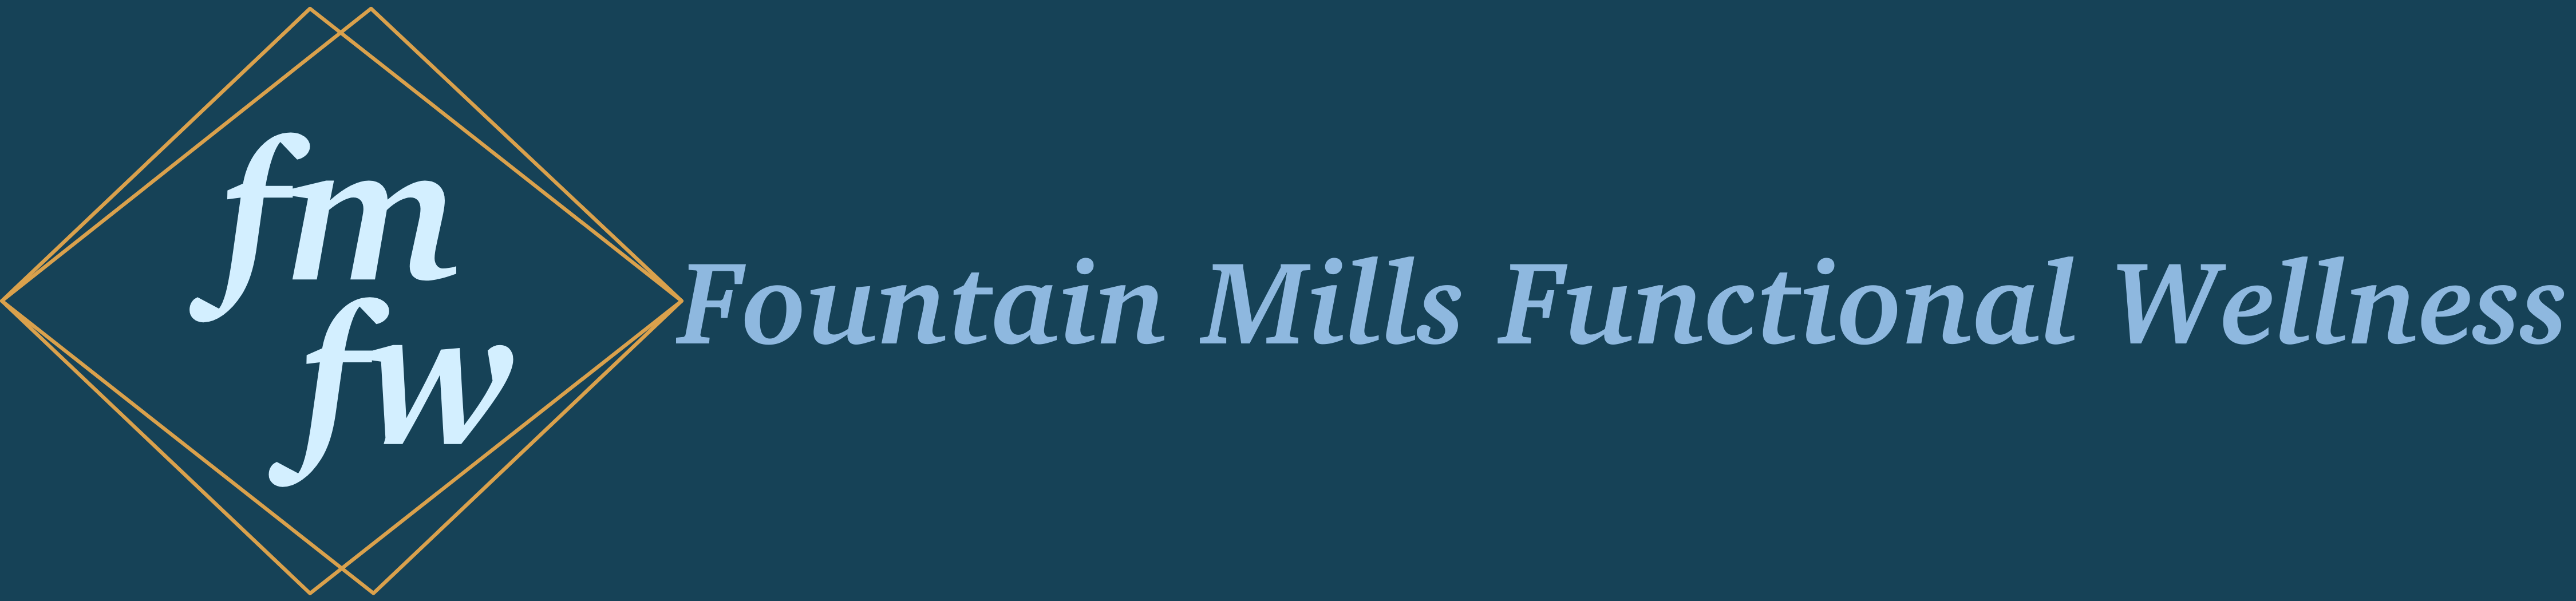 Fountain Mills Functional Wellness